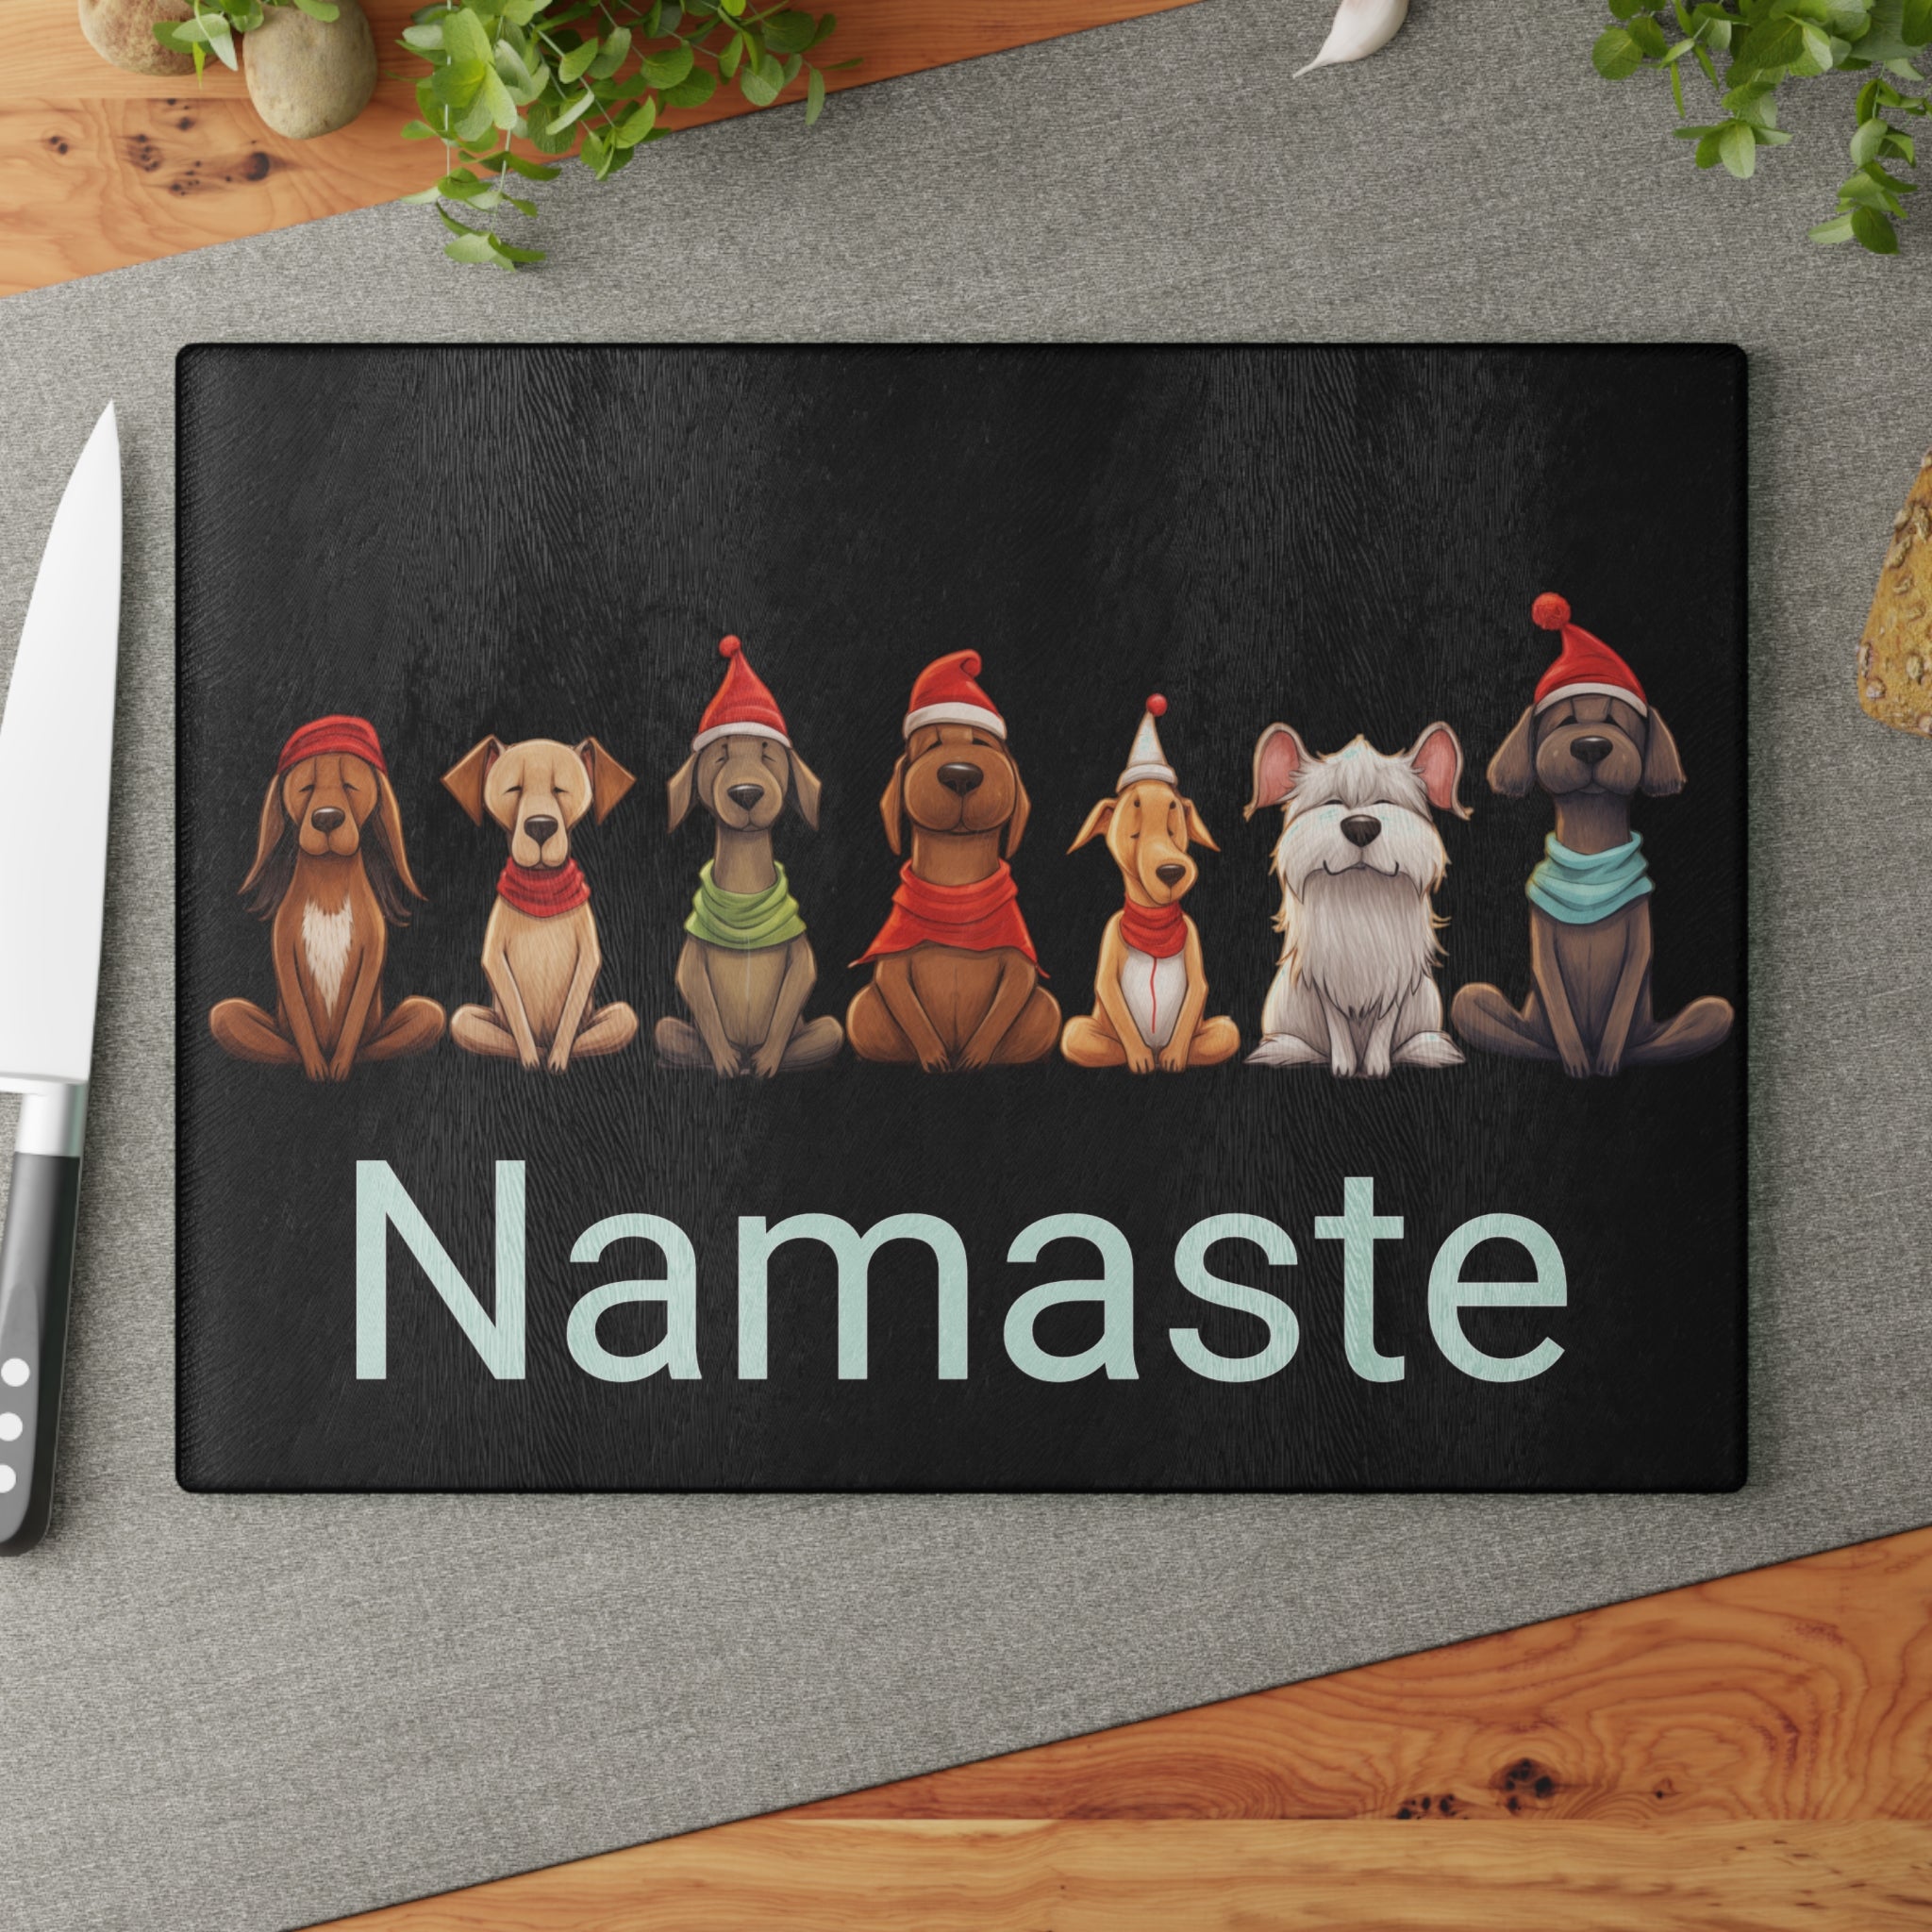 Namaste Yoga Dogs Christmas Glass Cutting Board - Kitchen Home Decor